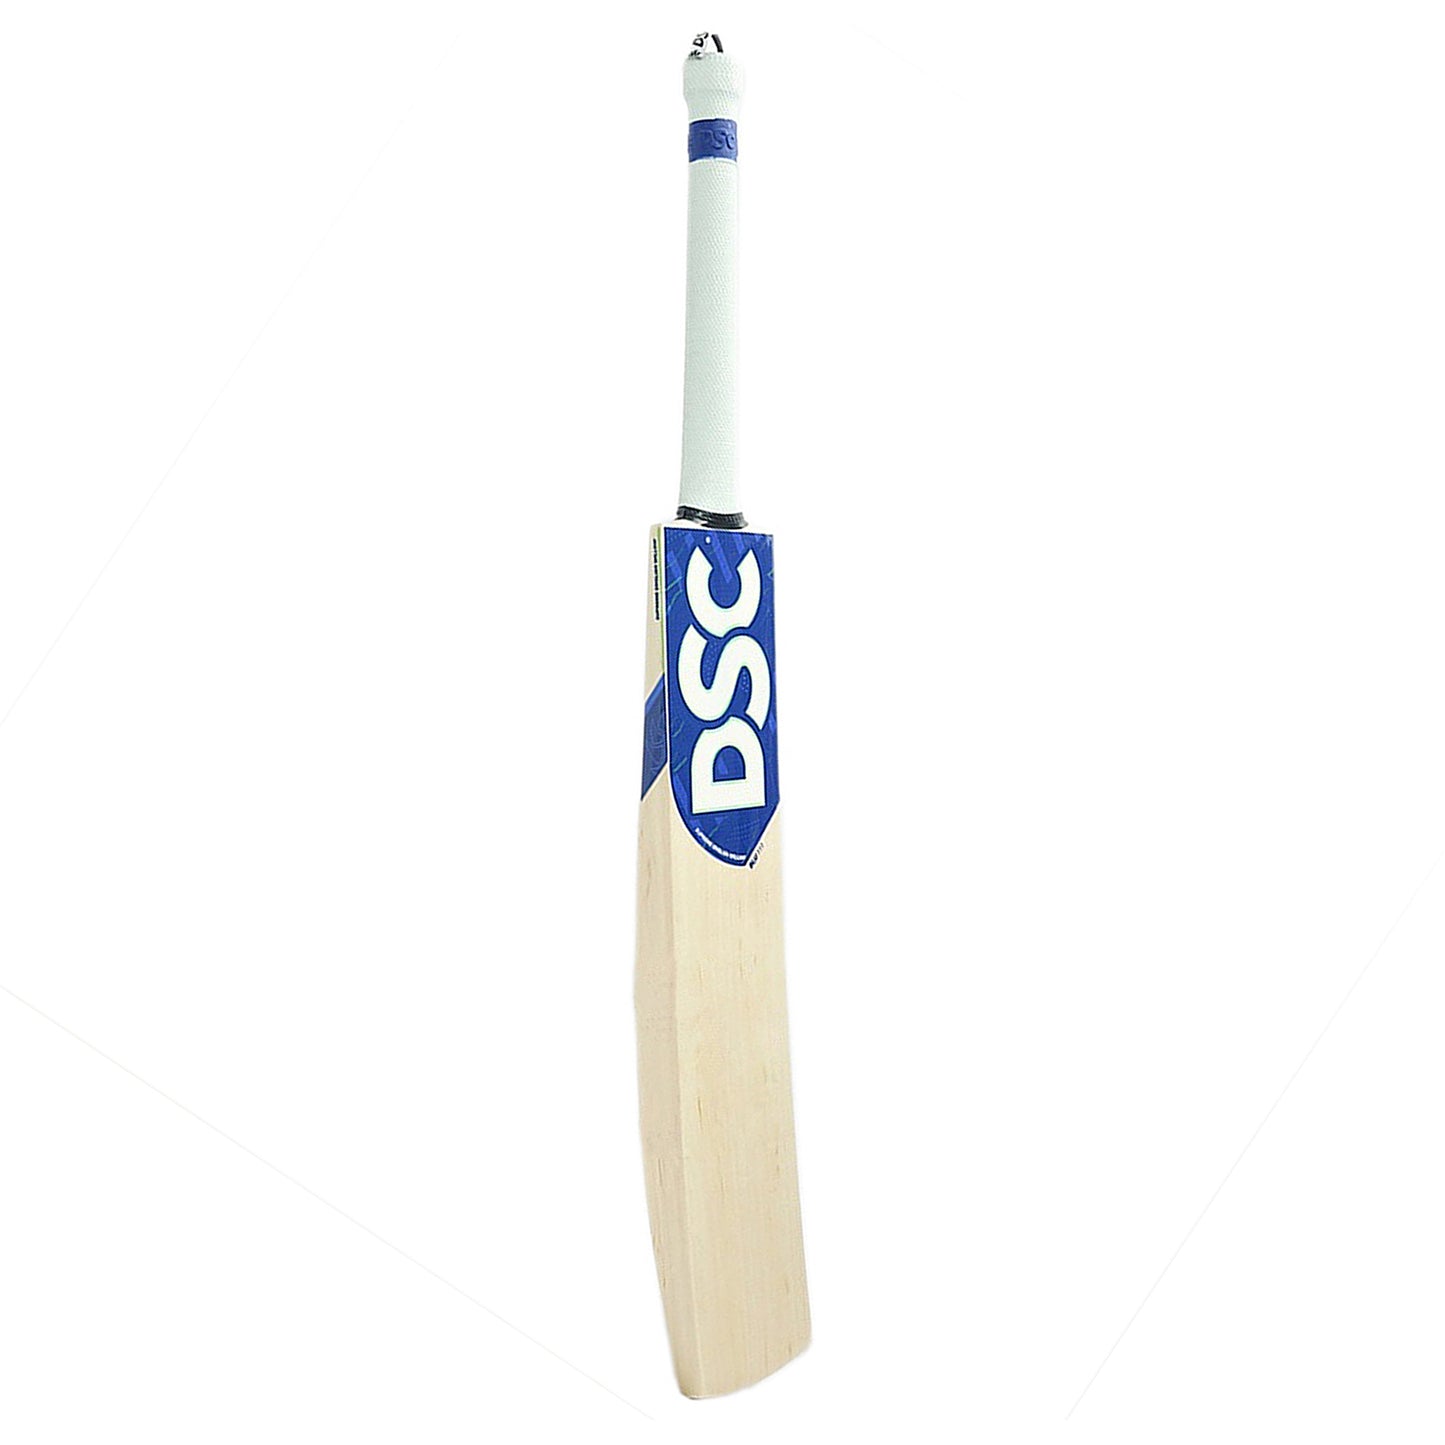 DSC Blu 111 English Willow Cricket Bat - Best Price online Prokicksports.com